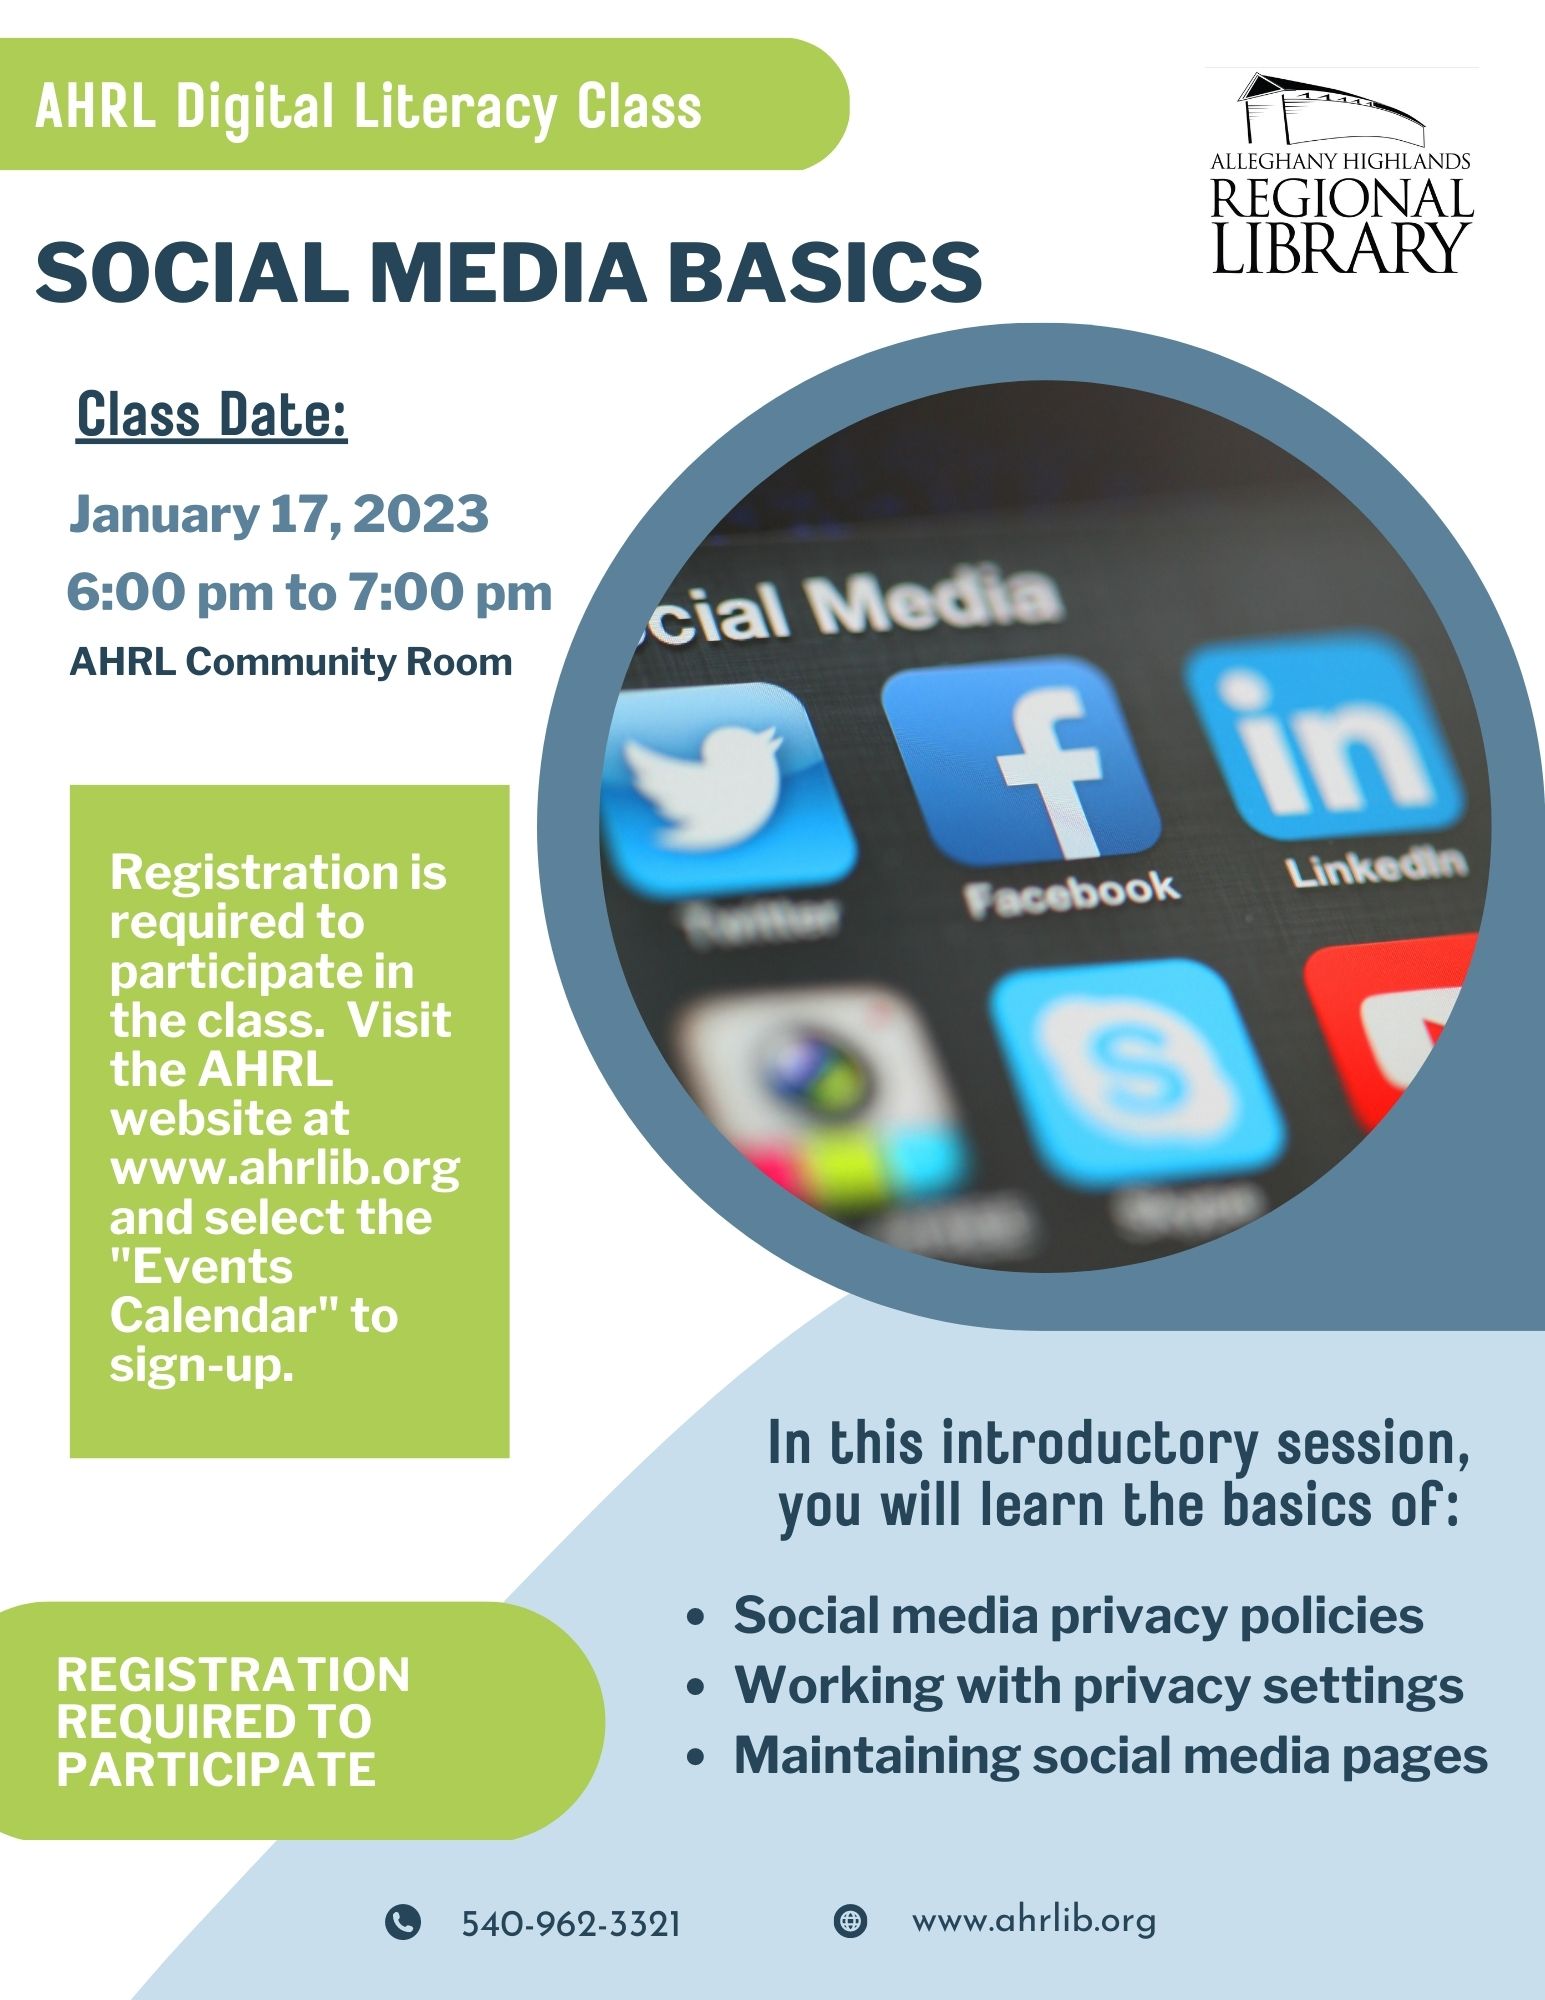 AHRL Digital Literacy Class Flyer--Social Media Basics